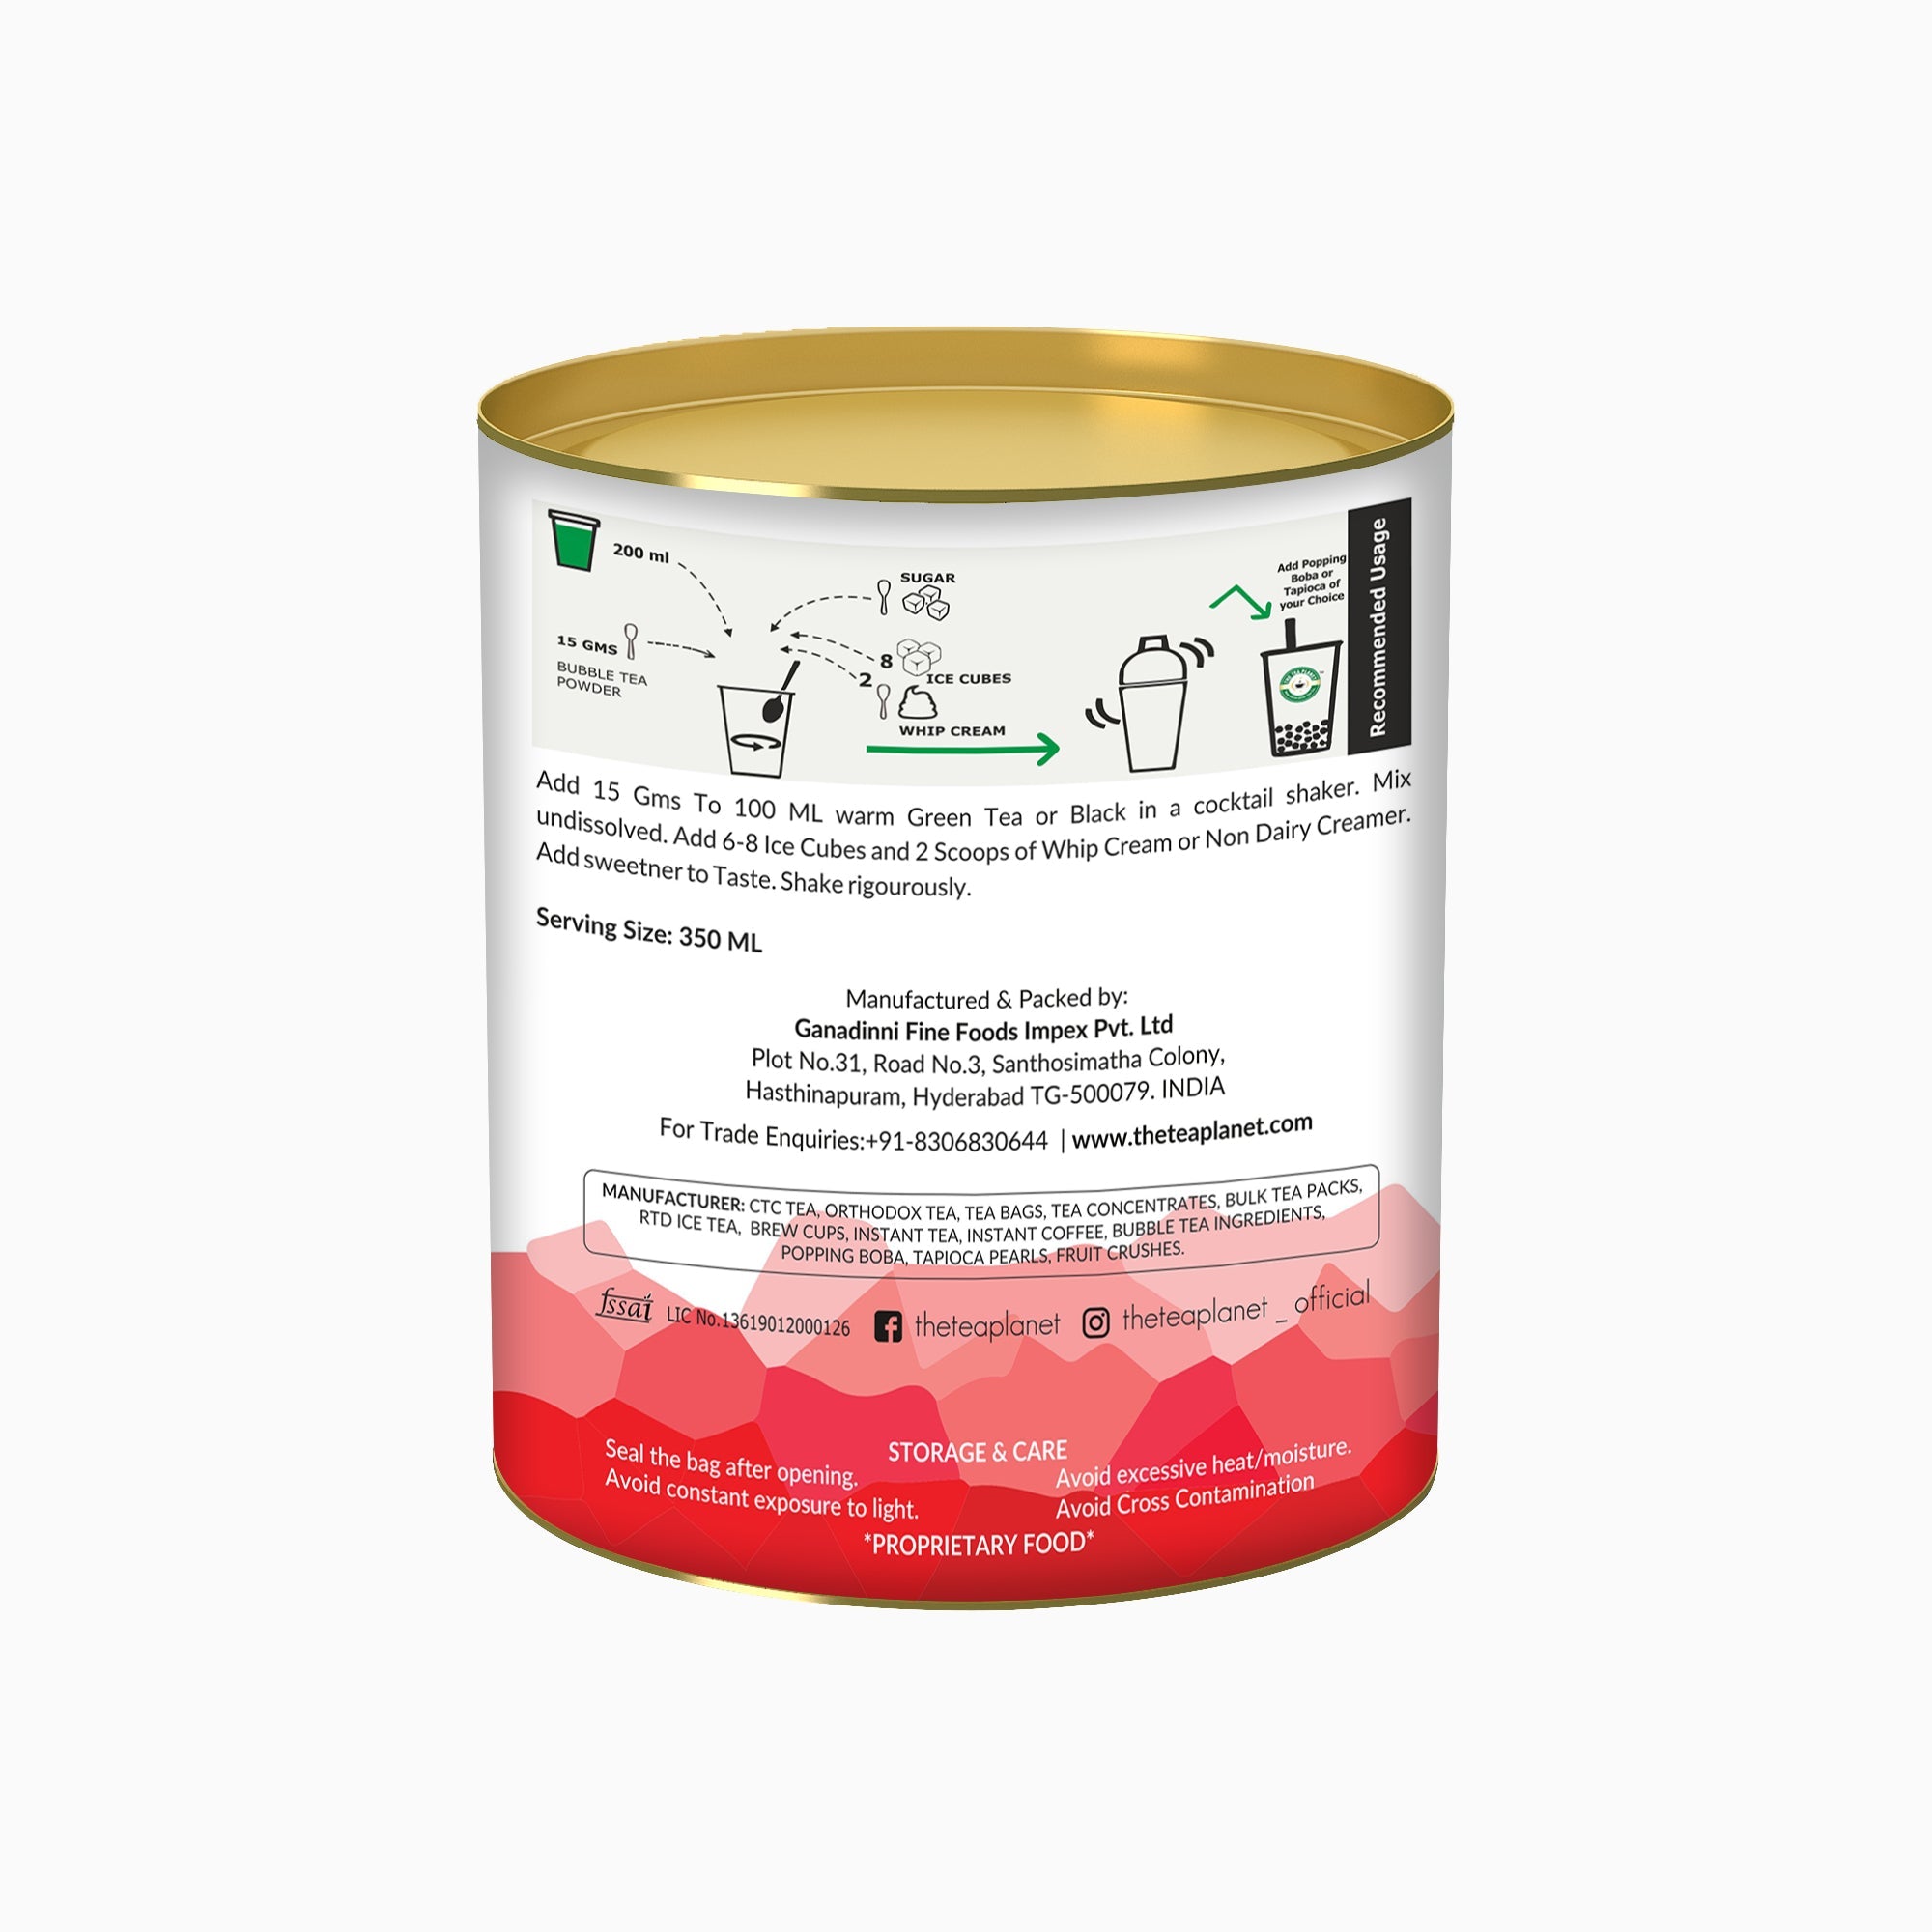 Pomegranate Bubble Tea Premix - 250 gms